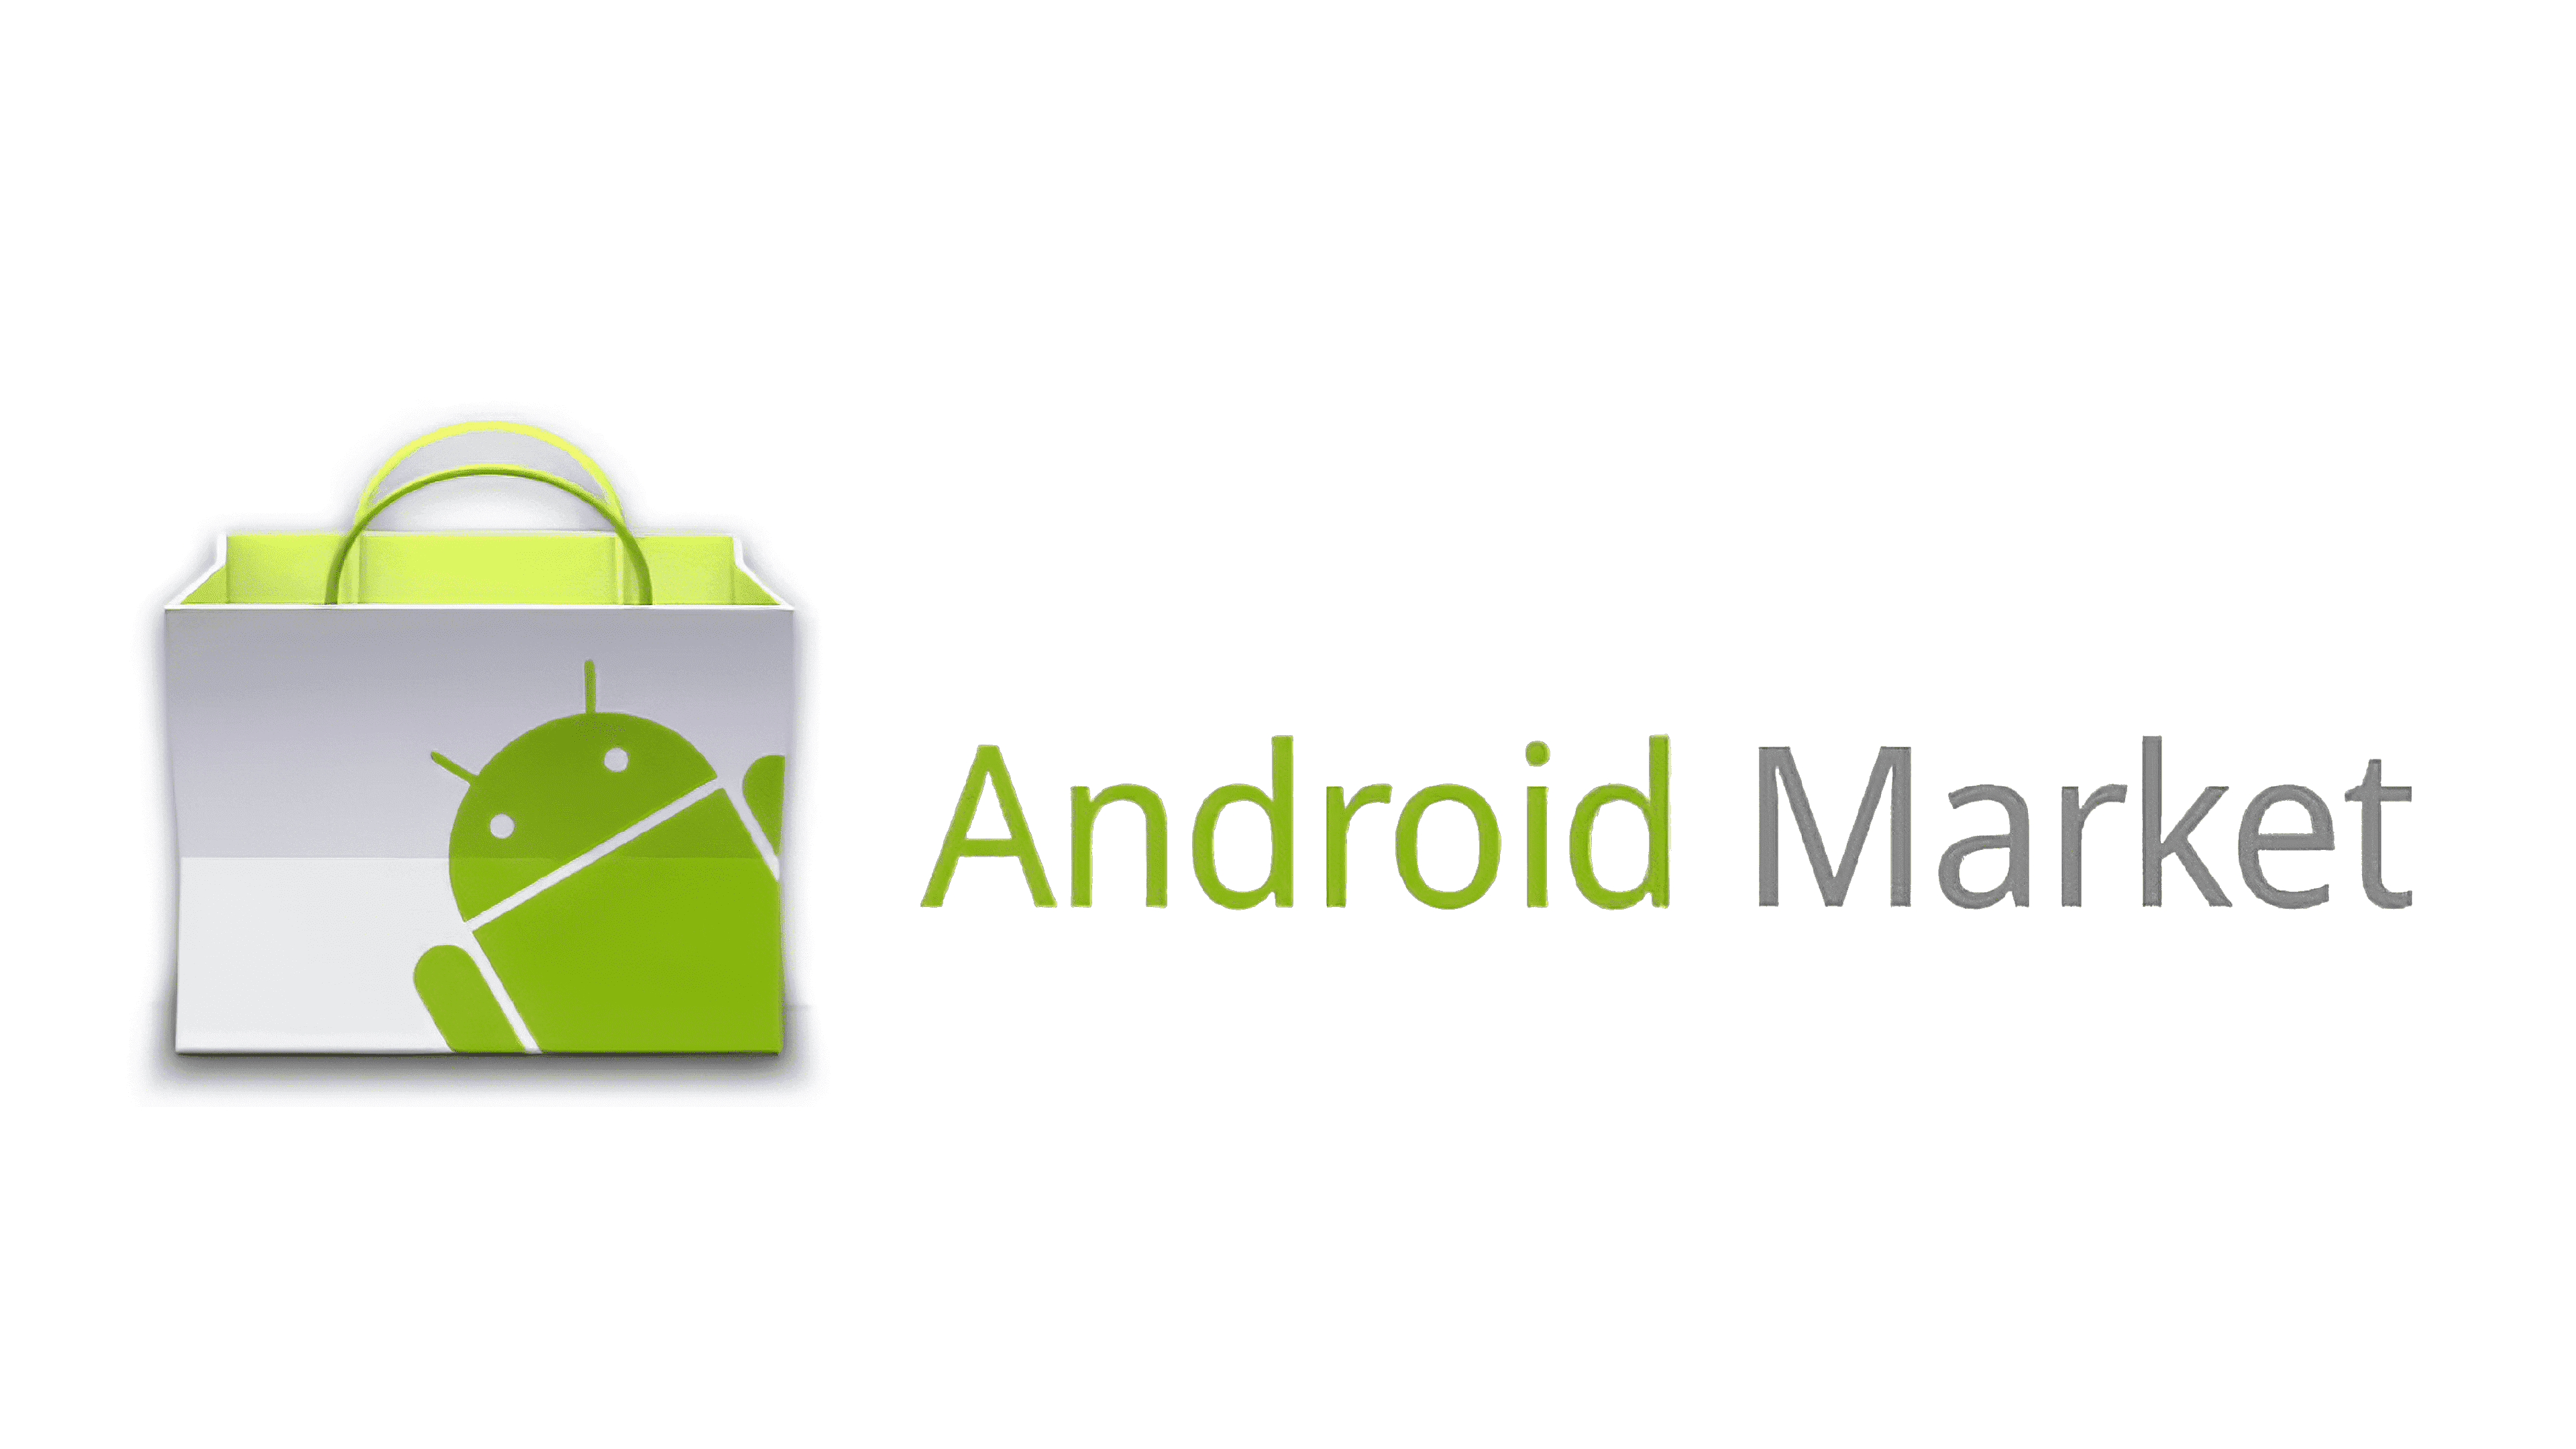 Андроид Маркет. Msk Android Market. Android Market logo History.